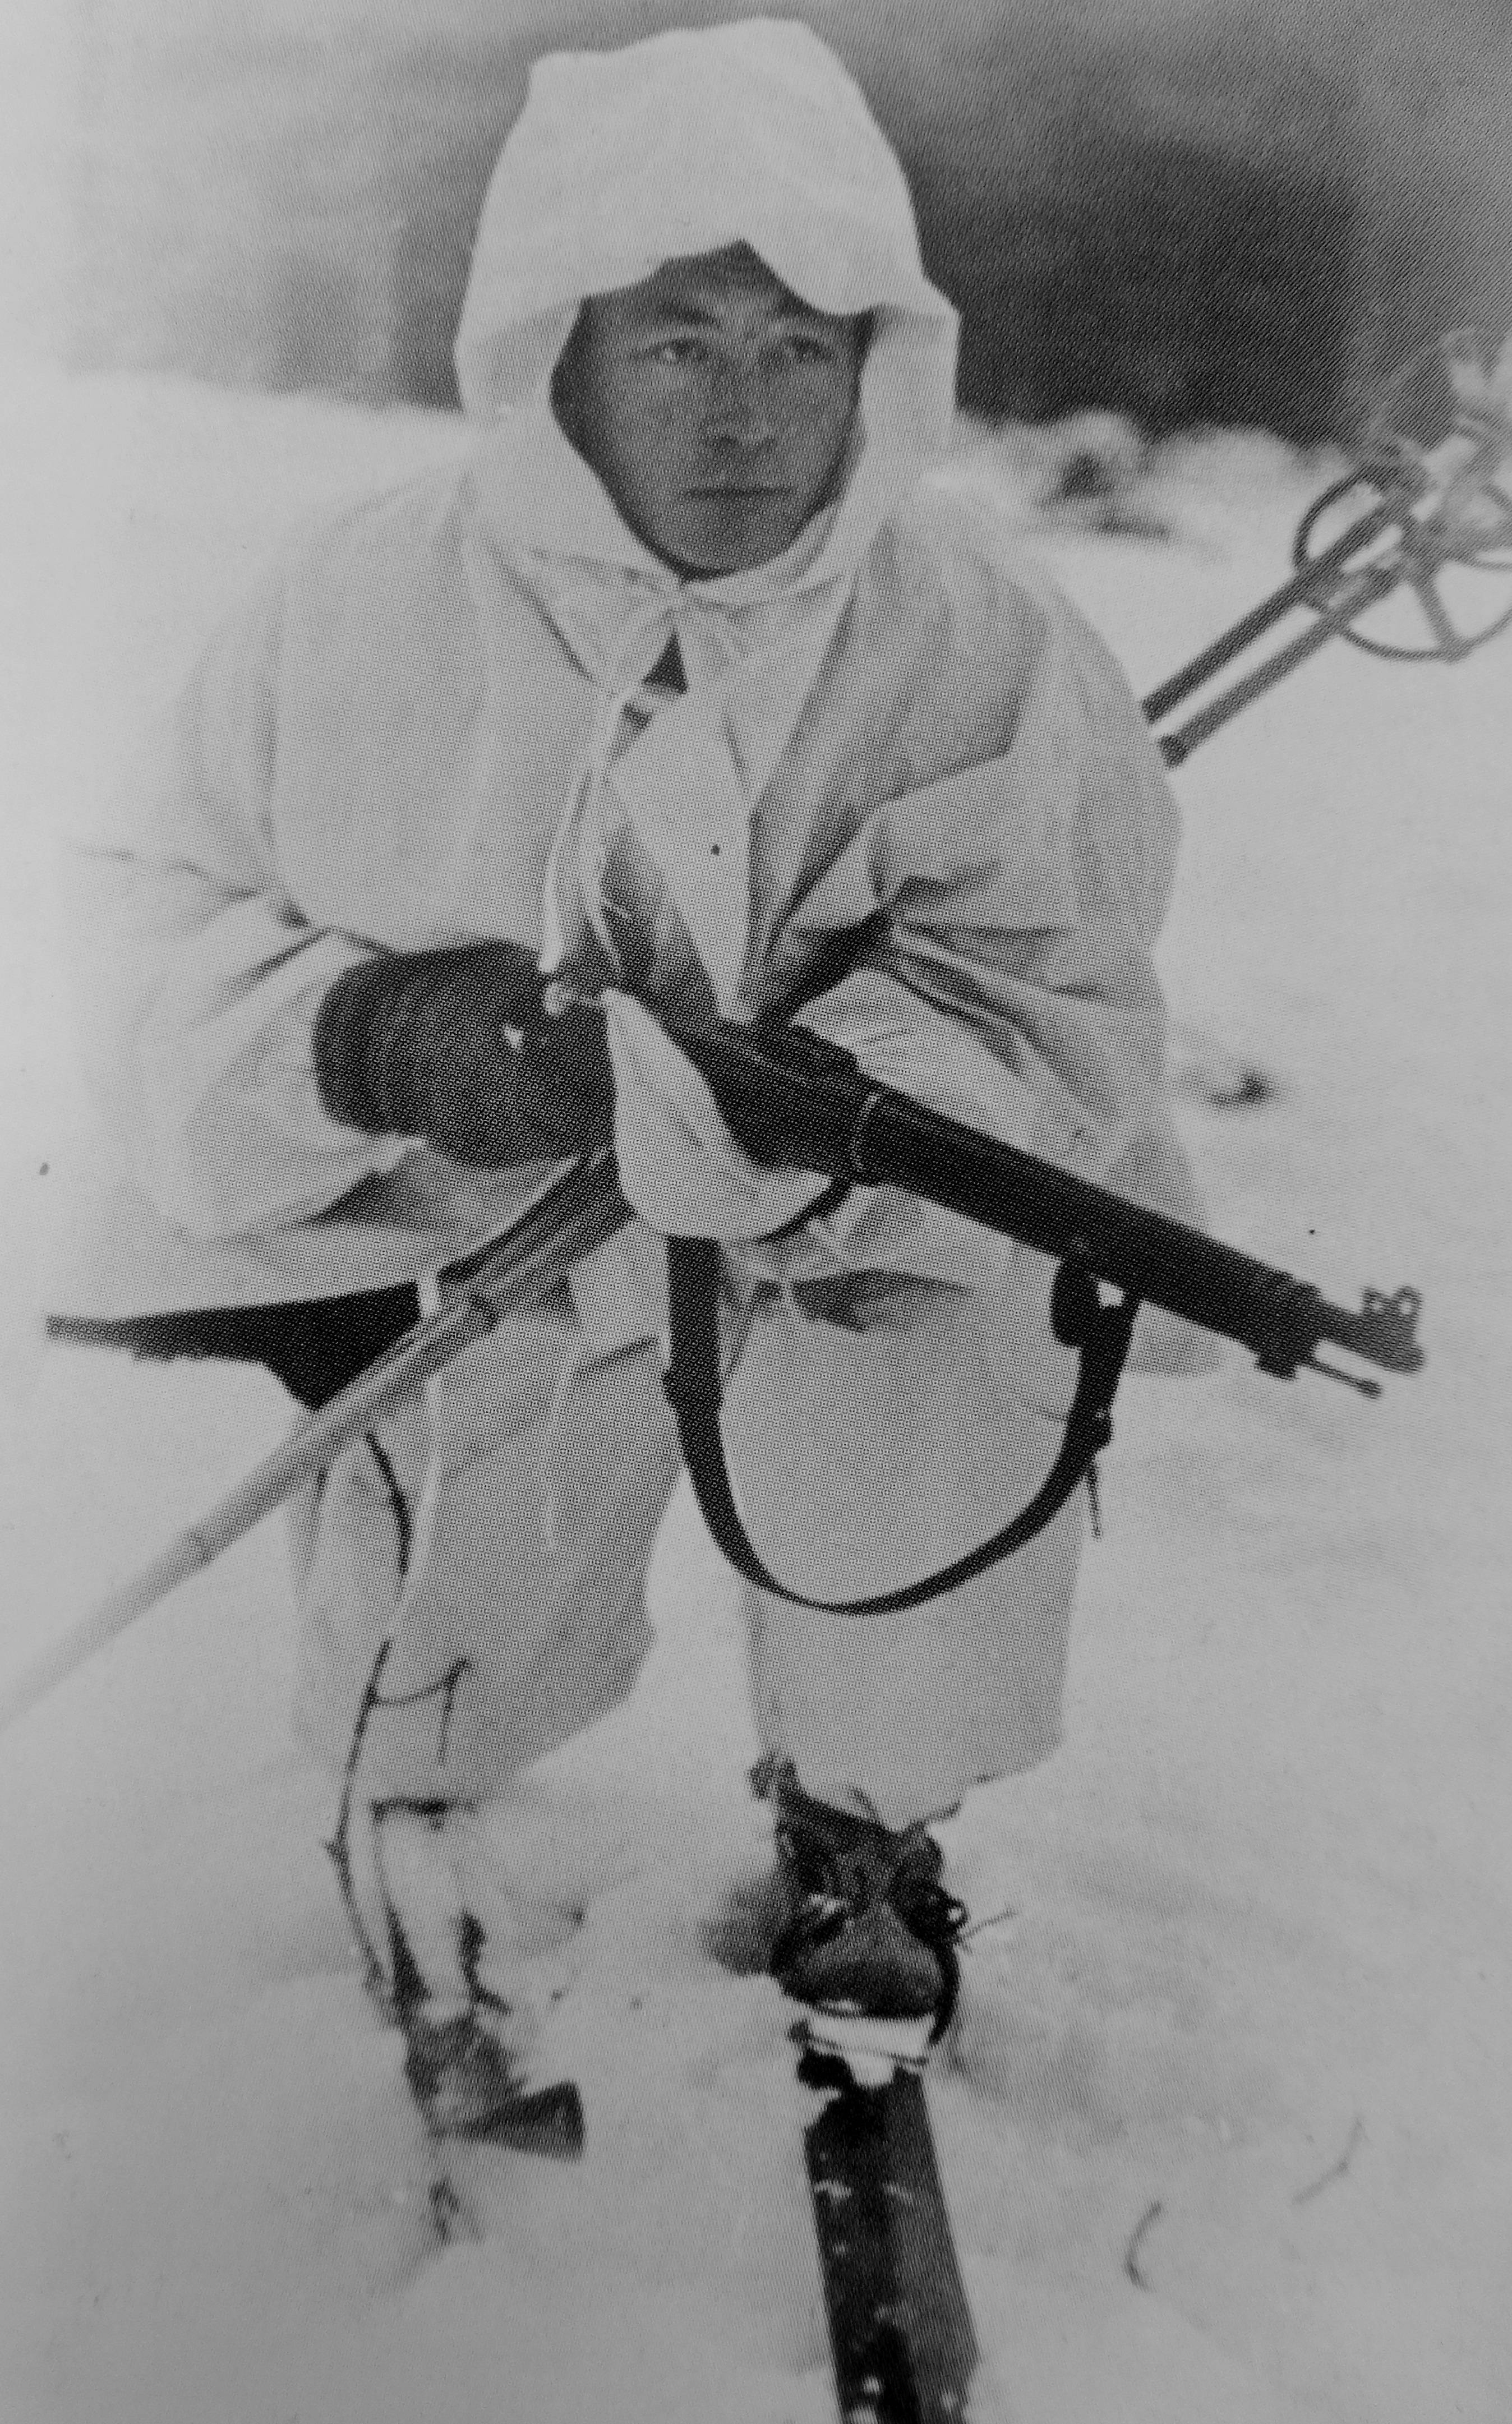 Симо хяюхя — фото, биография, личная жизнь, причина смерти, финский снайпер - 24сми